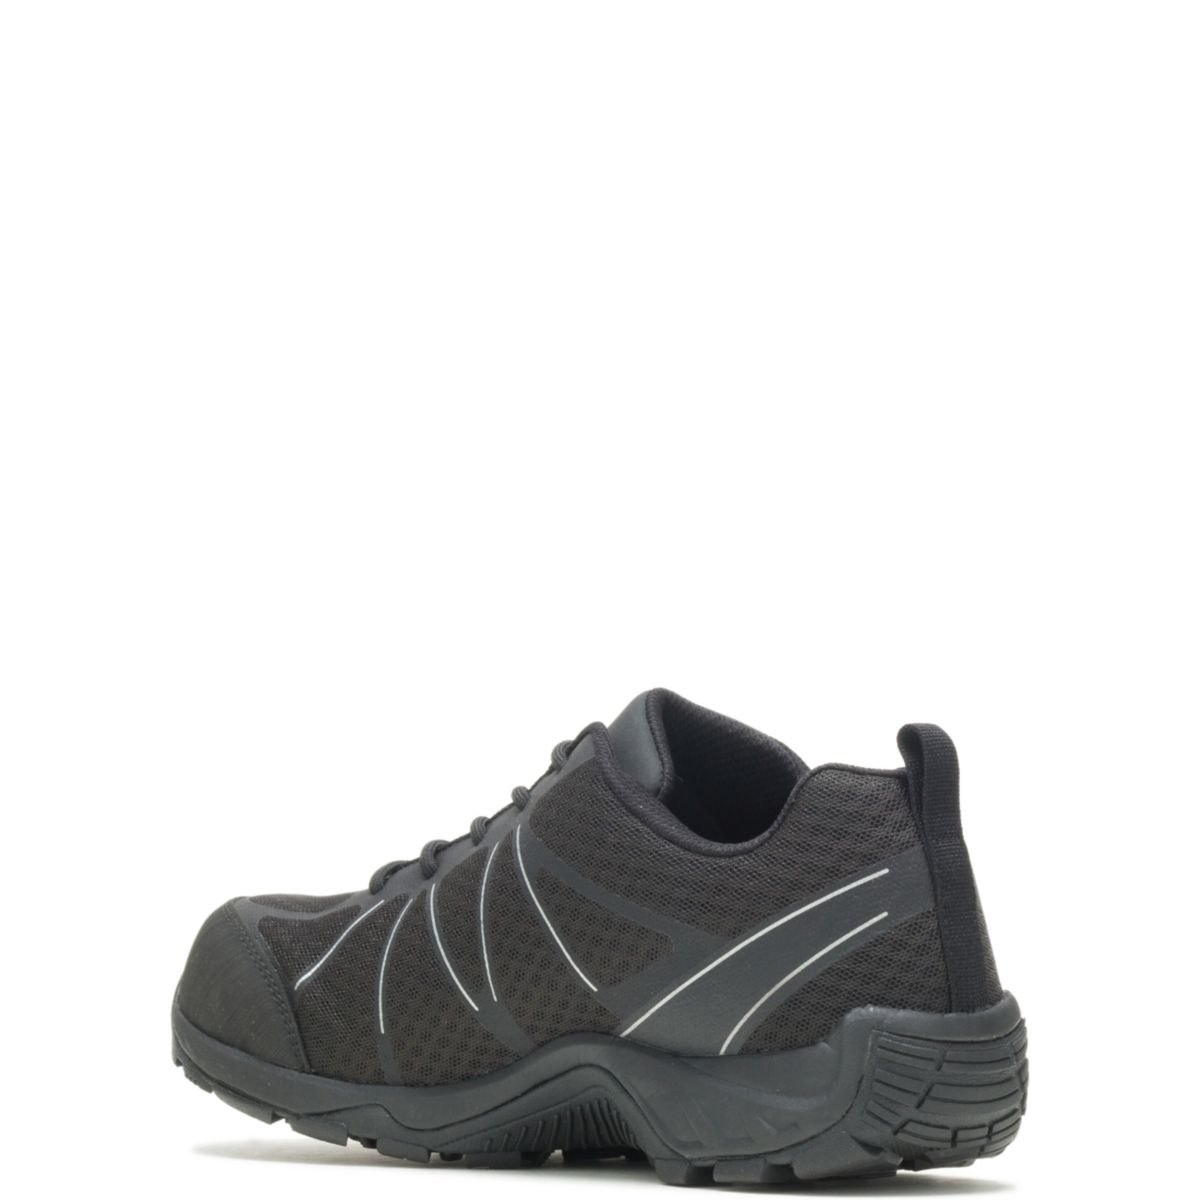 WOLVERINE Men's Amherst II CarbonMAXÂ® Composite Toe Work Shoe Black - W201147 BLACK - BLACK, 14